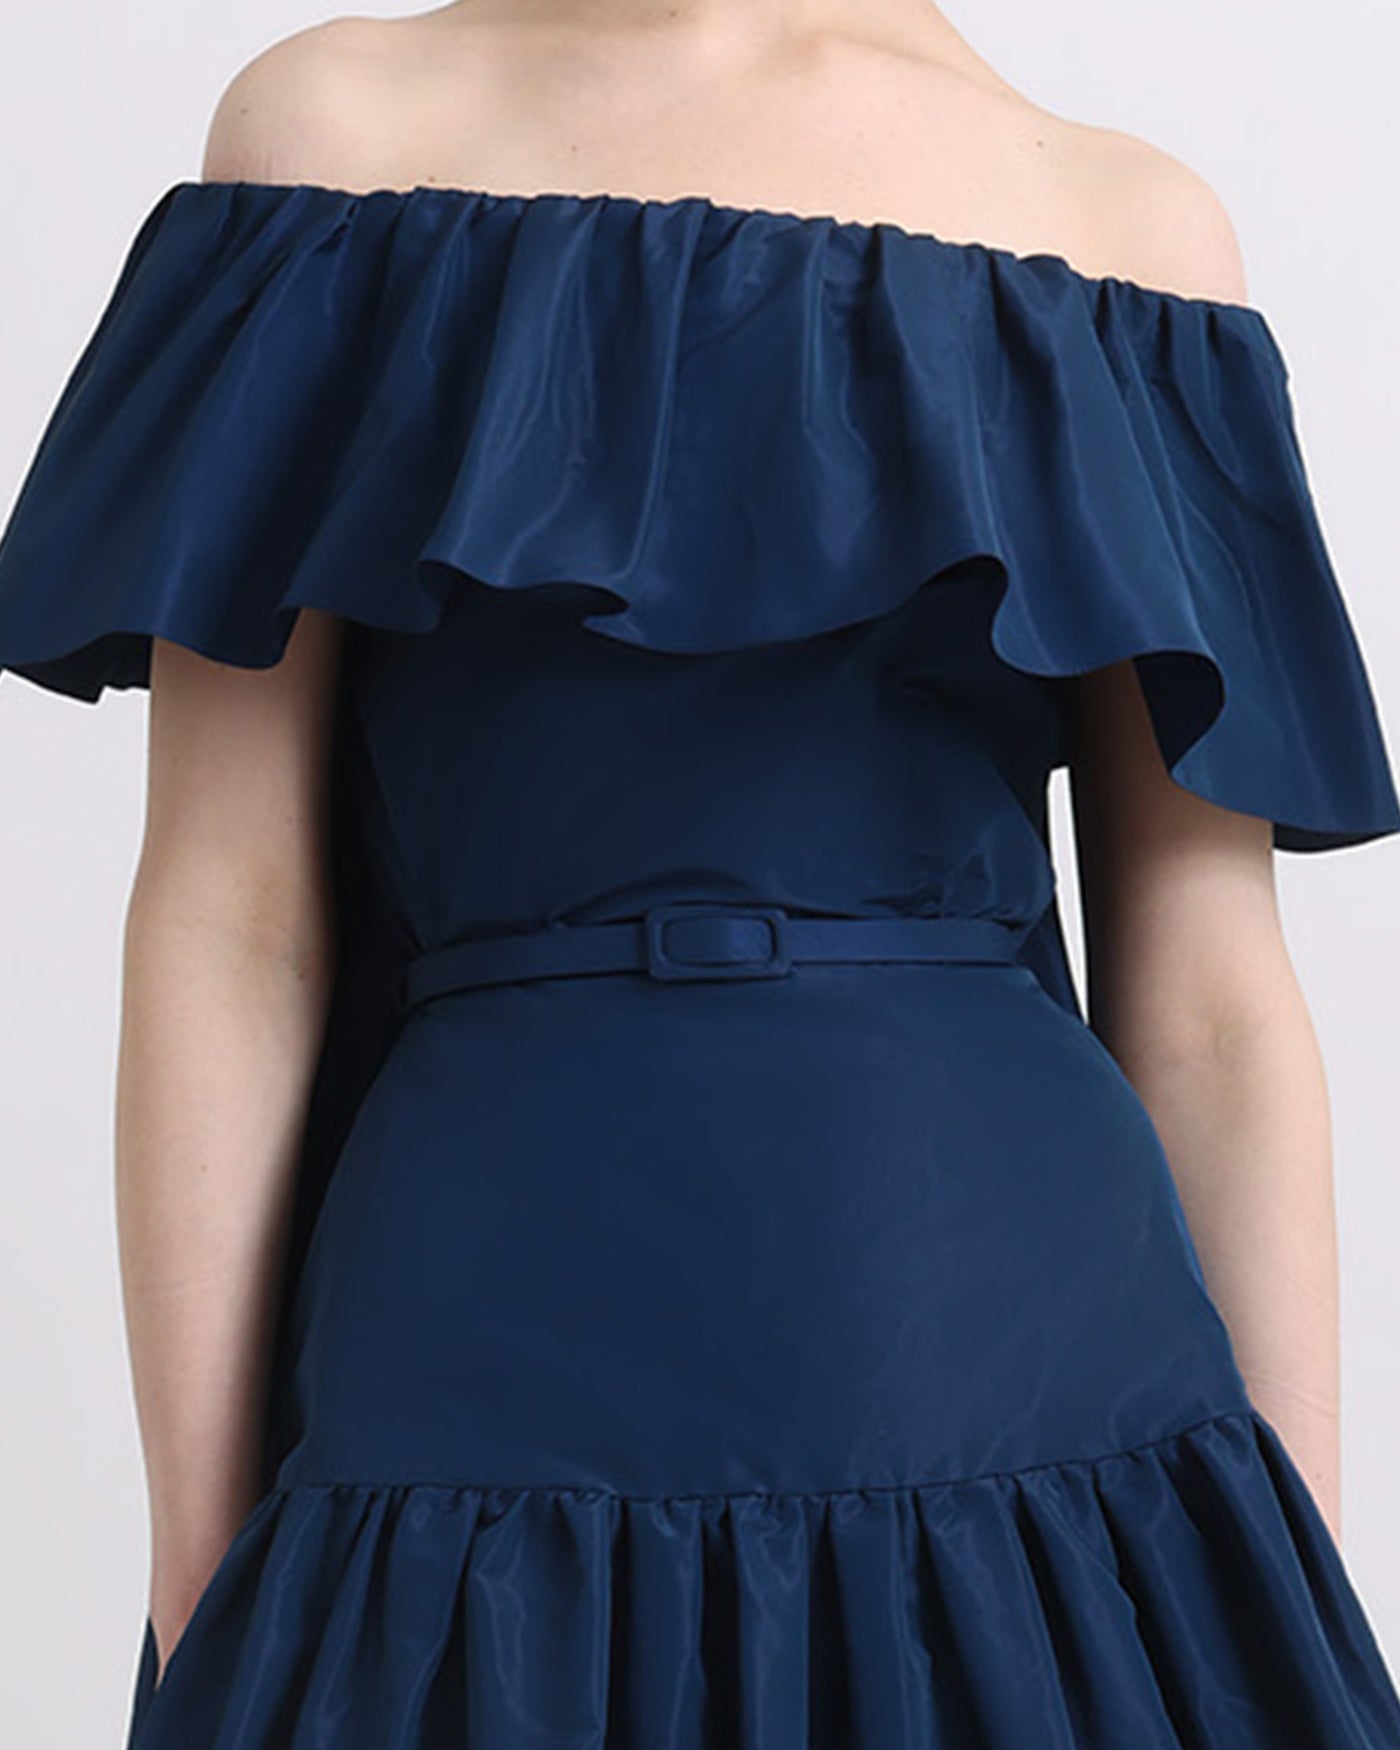 Off-Shoulder Top with Taffeta Skirt